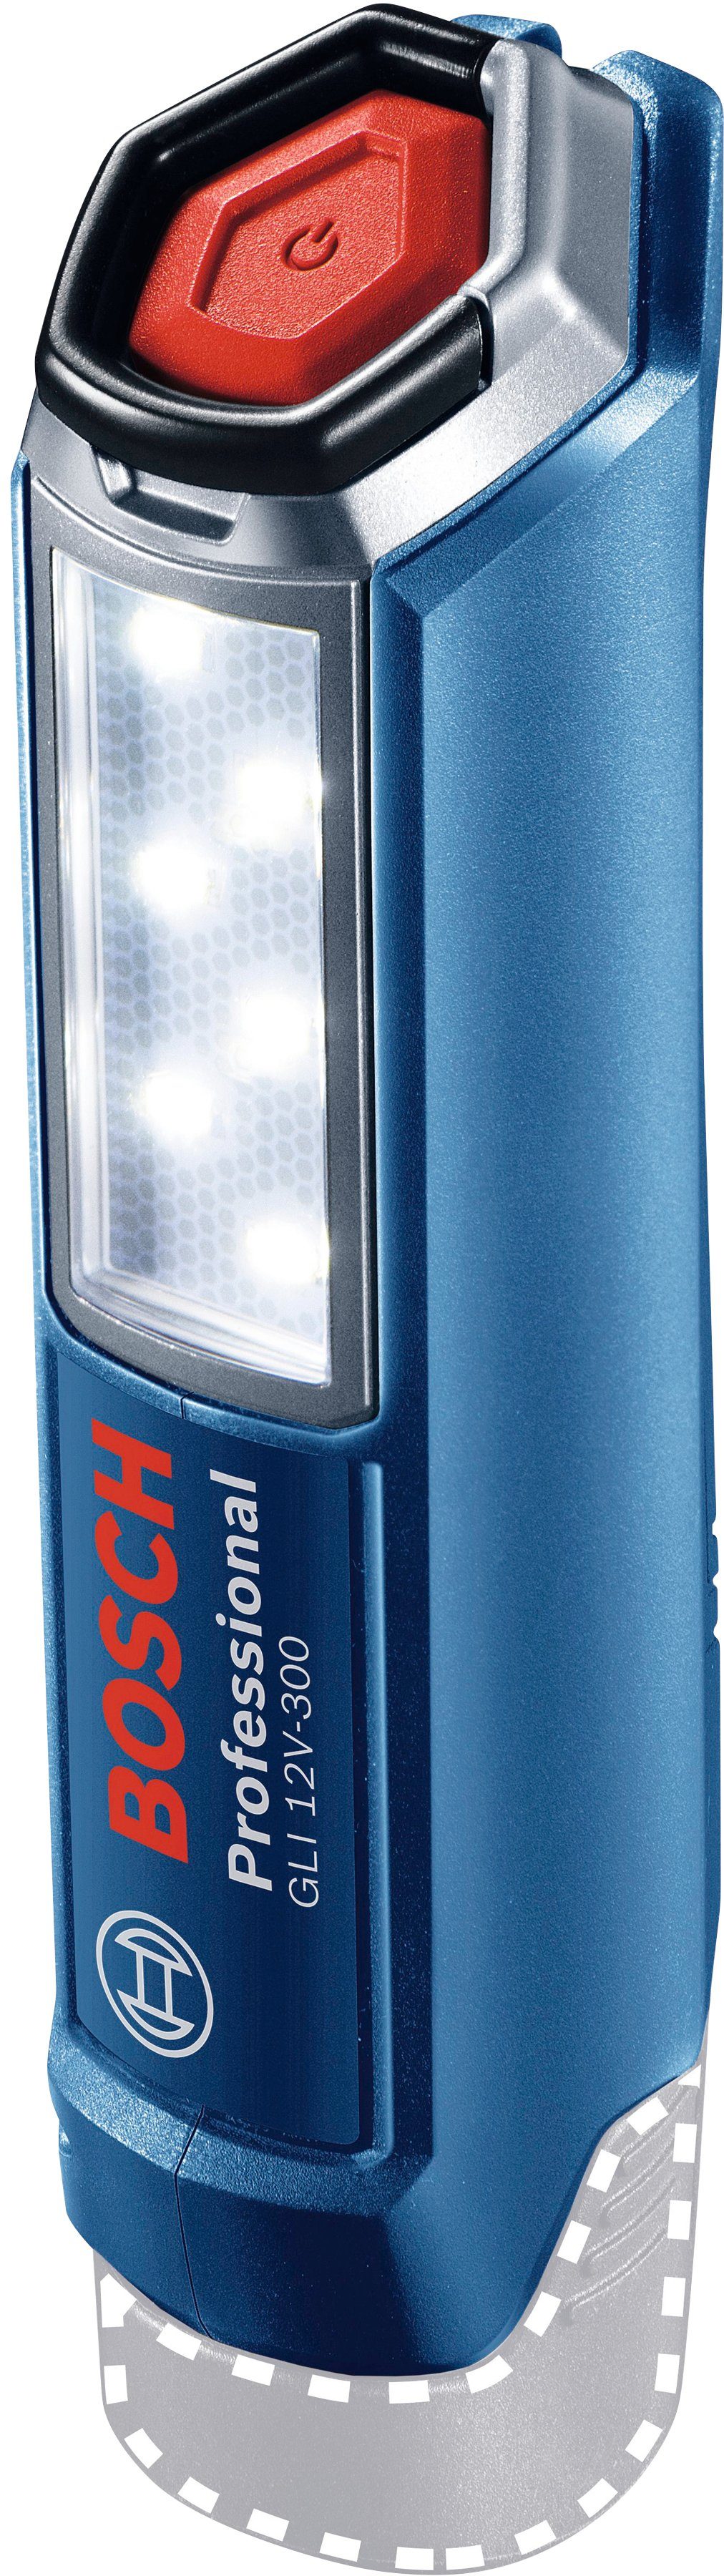 GLI LED Aufhängevorrichtung LED fest 12V-300, lm, 12 Arbeitsleuchte V, 300 integriert, ohne Akku, Bosch Praktische Professional